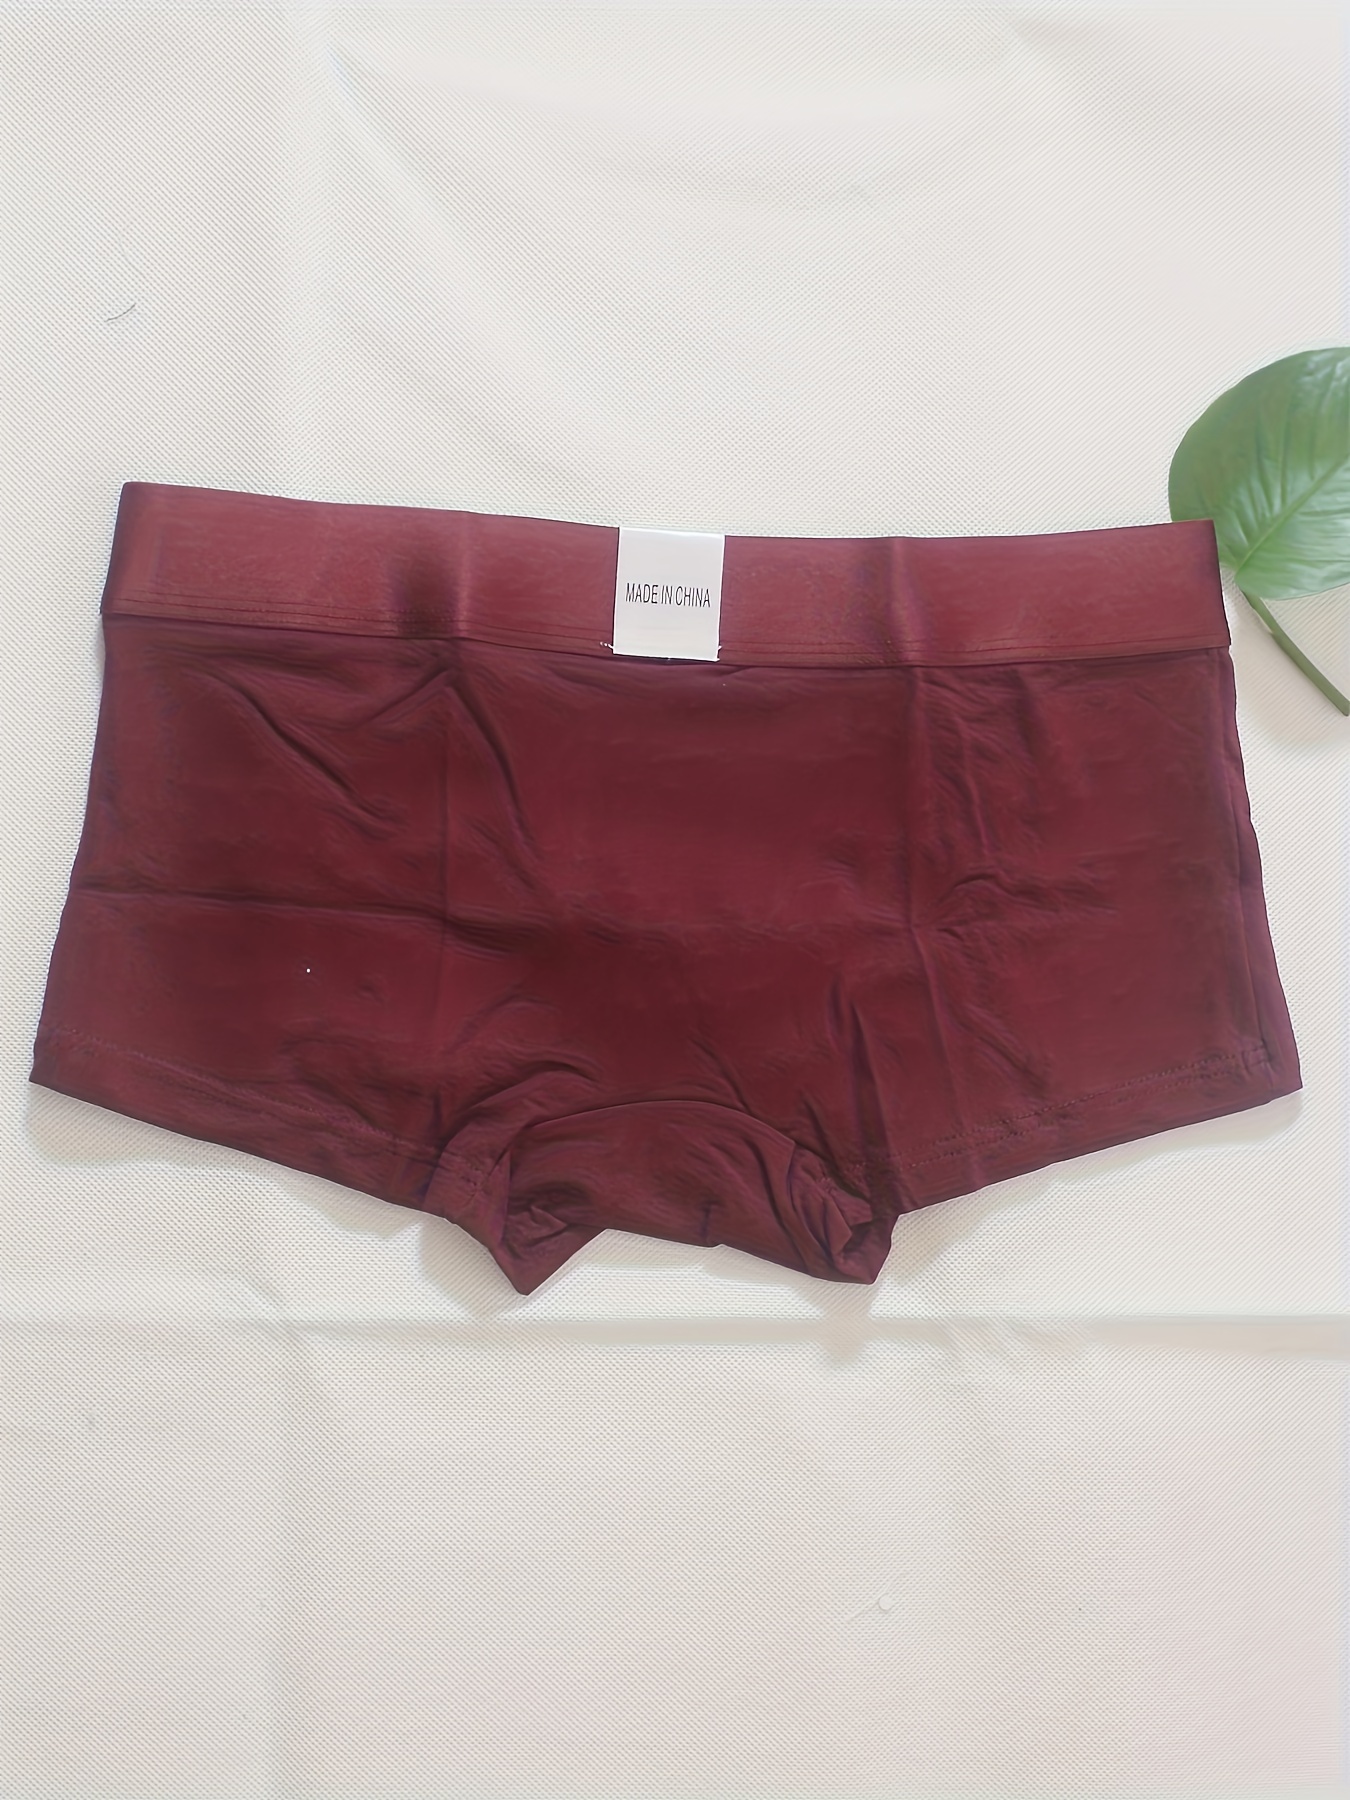 Mens Penis Hole Boxer Shorts Men Open Front Underwear Sexy Pouch Underpants  CA